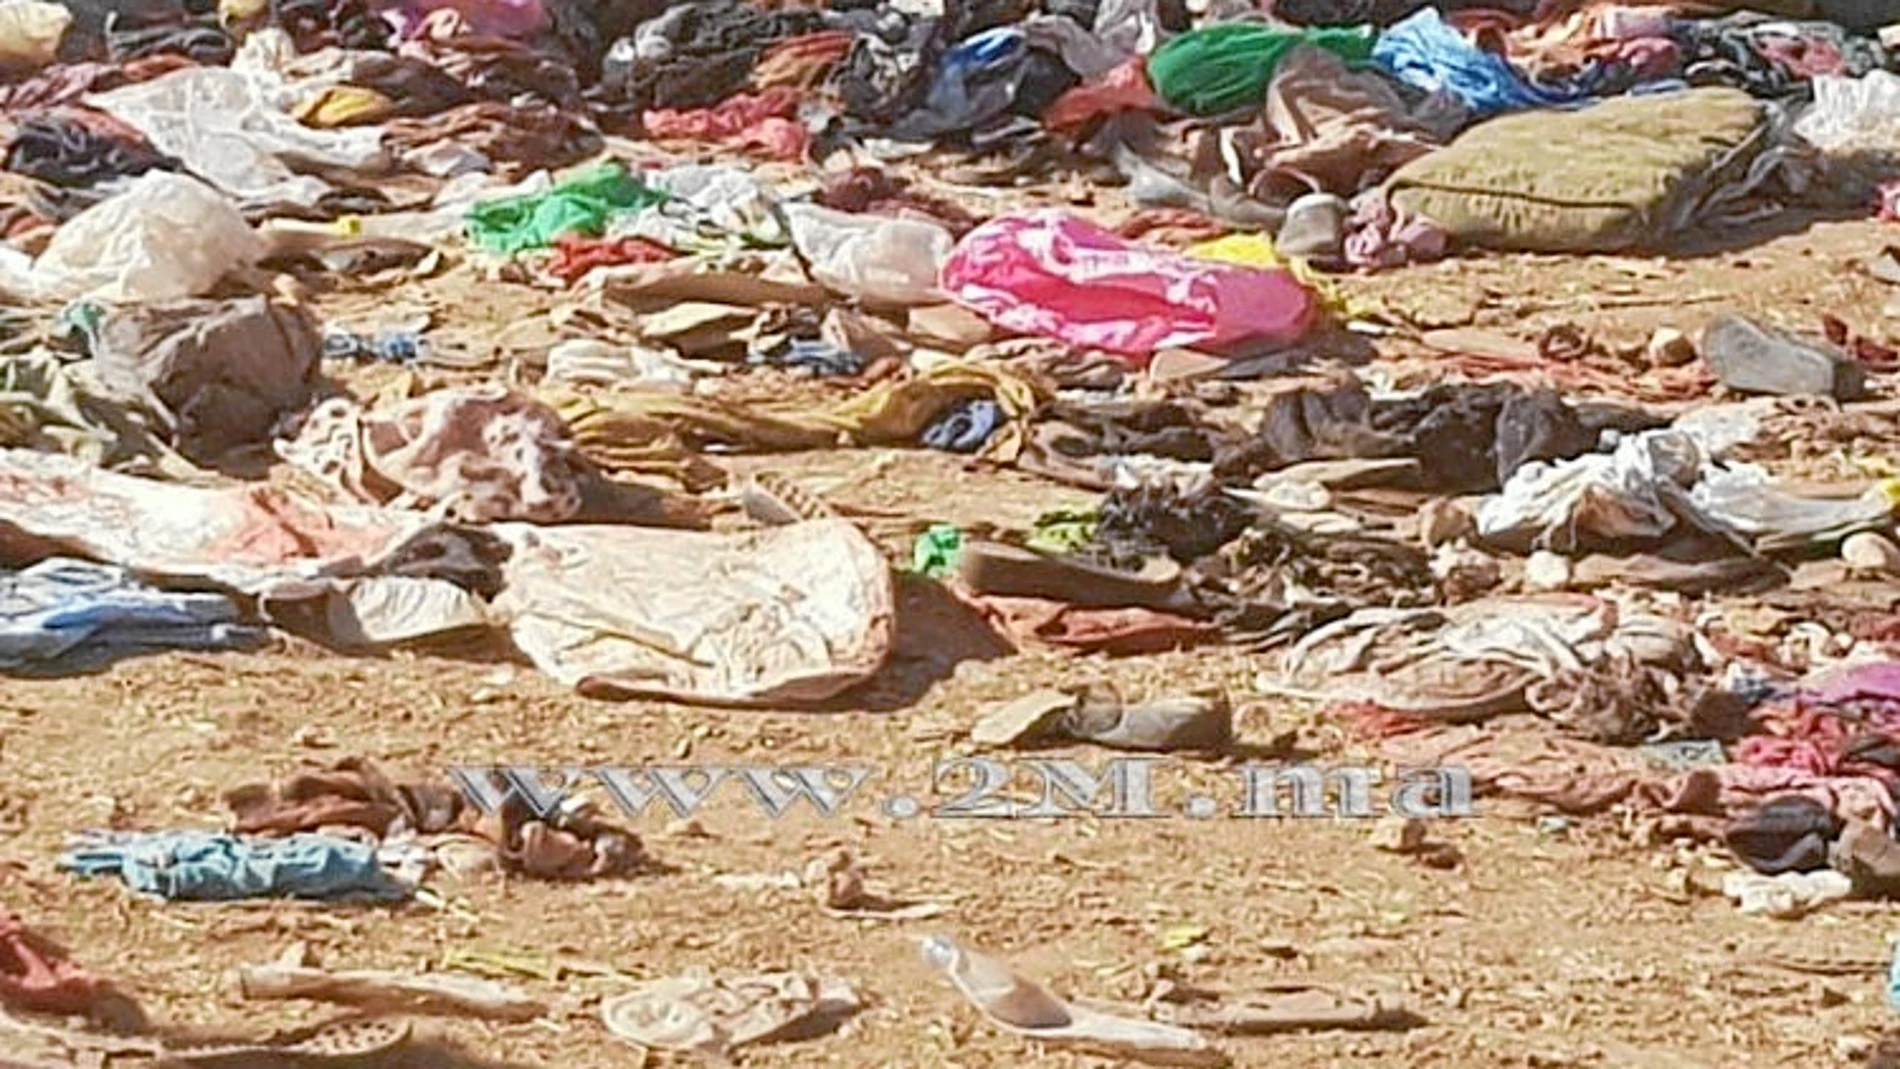 Imagen posterior a la estampida humana en el mercado de Sidi Bulaalam